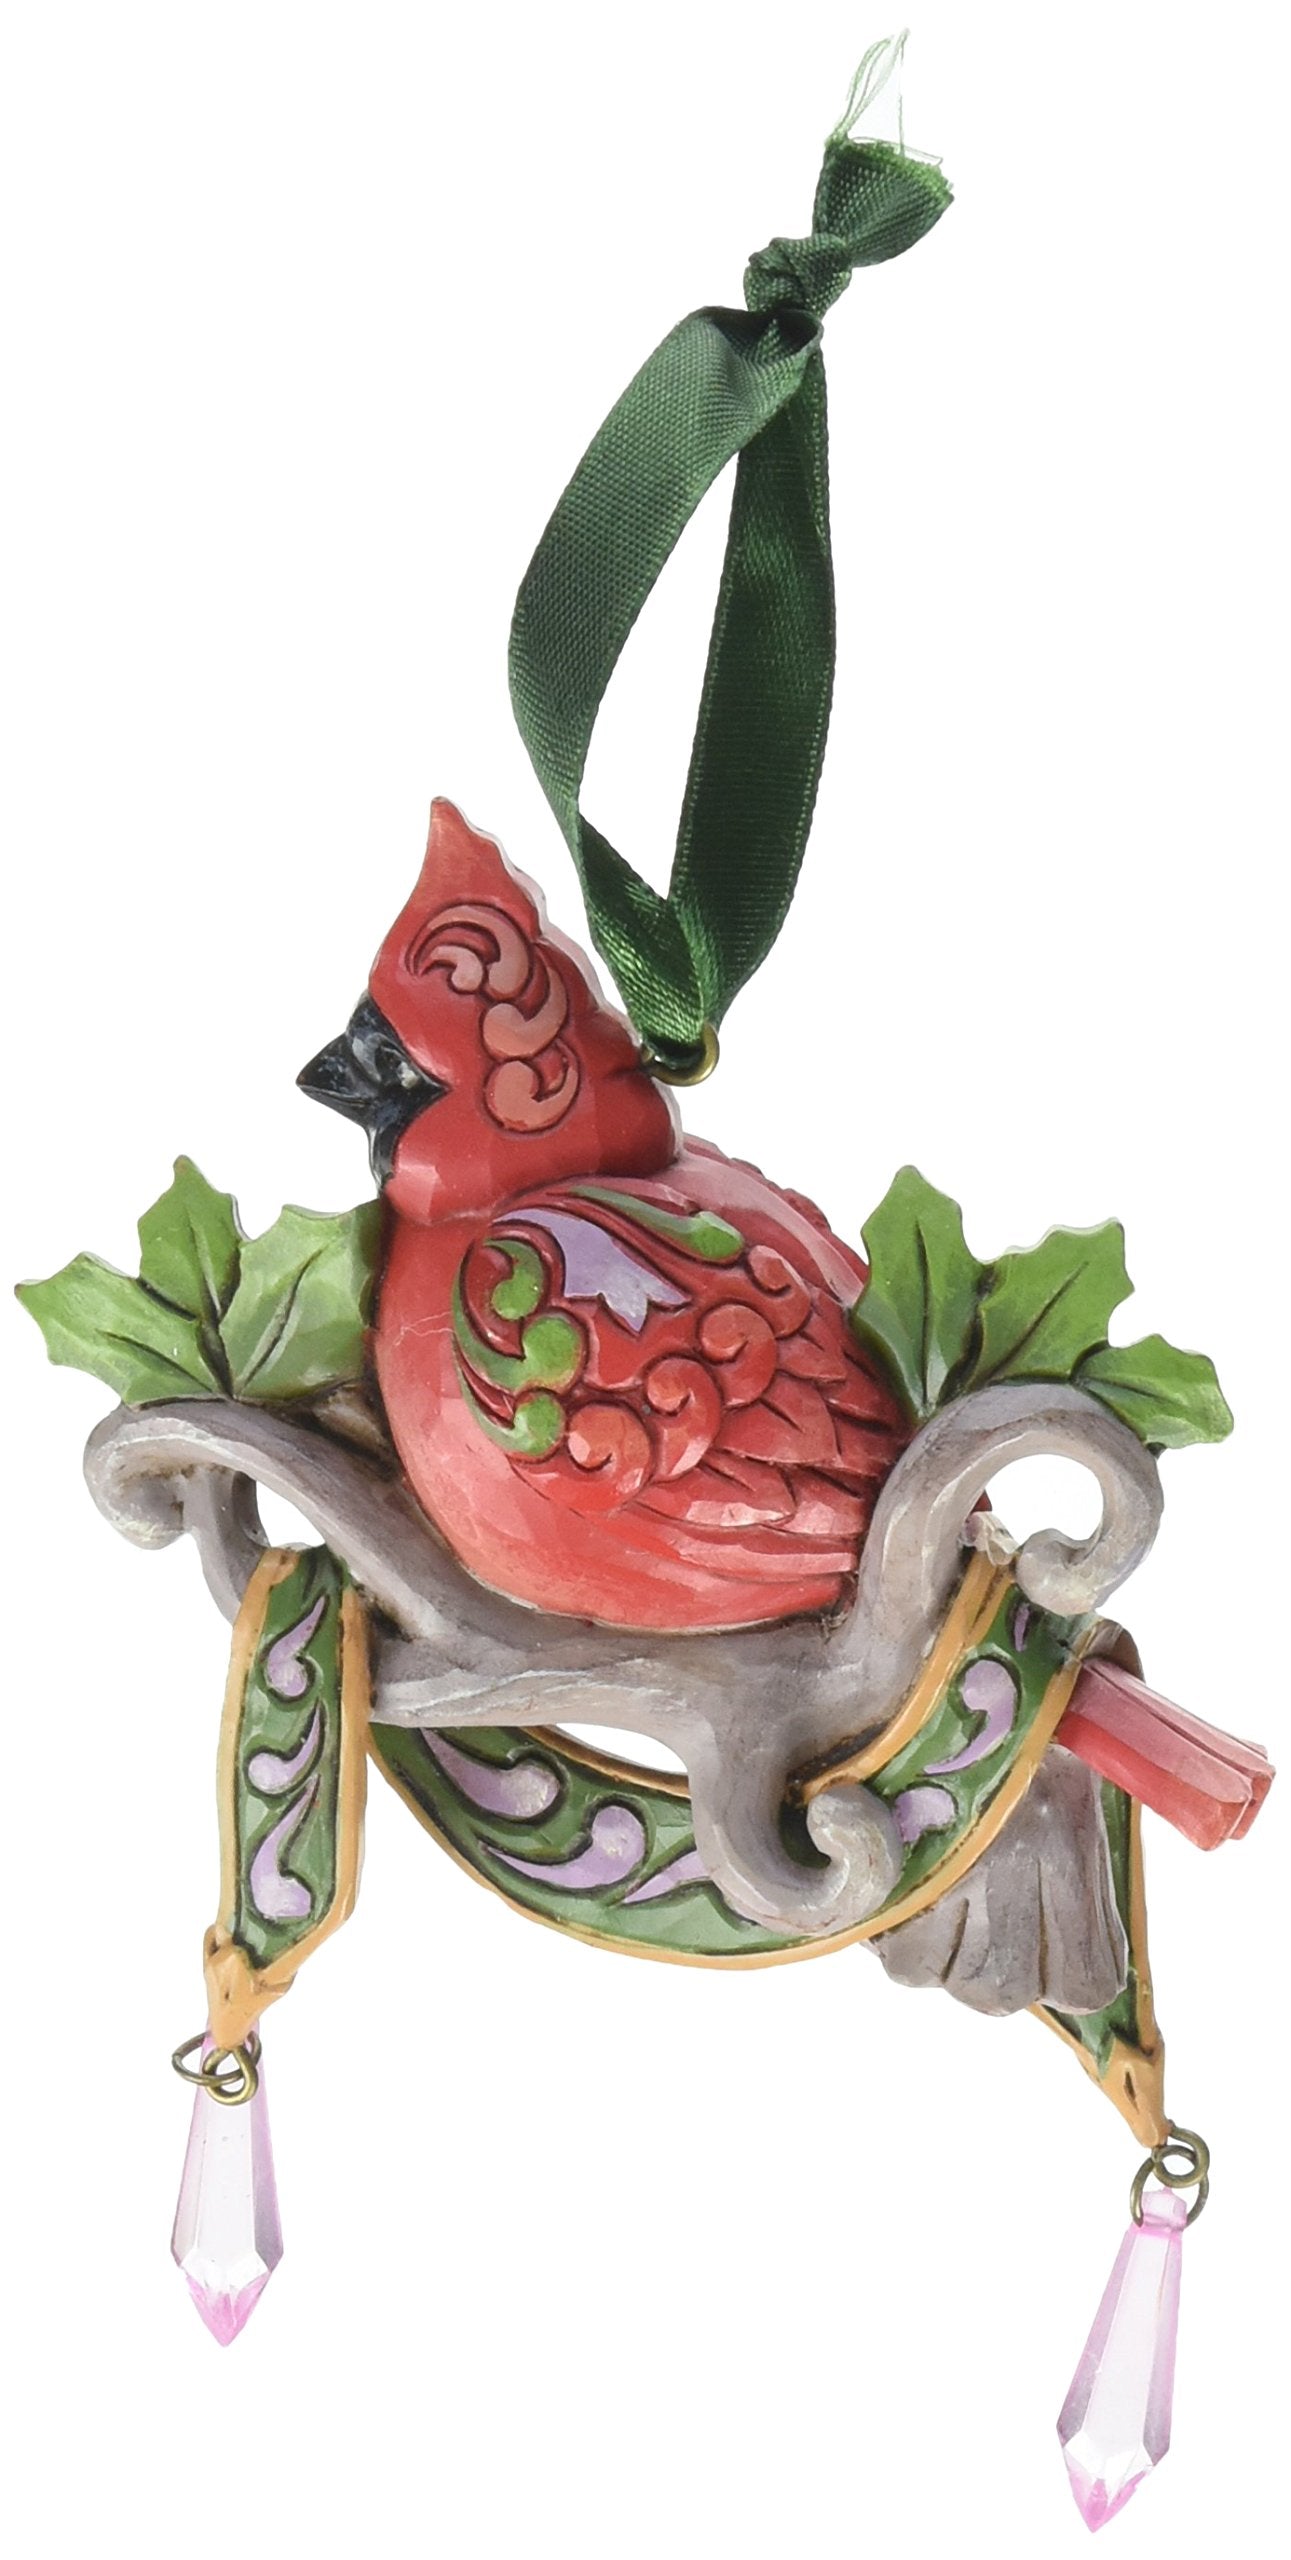 Jim Shore for Enesco Heartwood Creek Legend of Christmas Cardinal Ornament, 4.3"